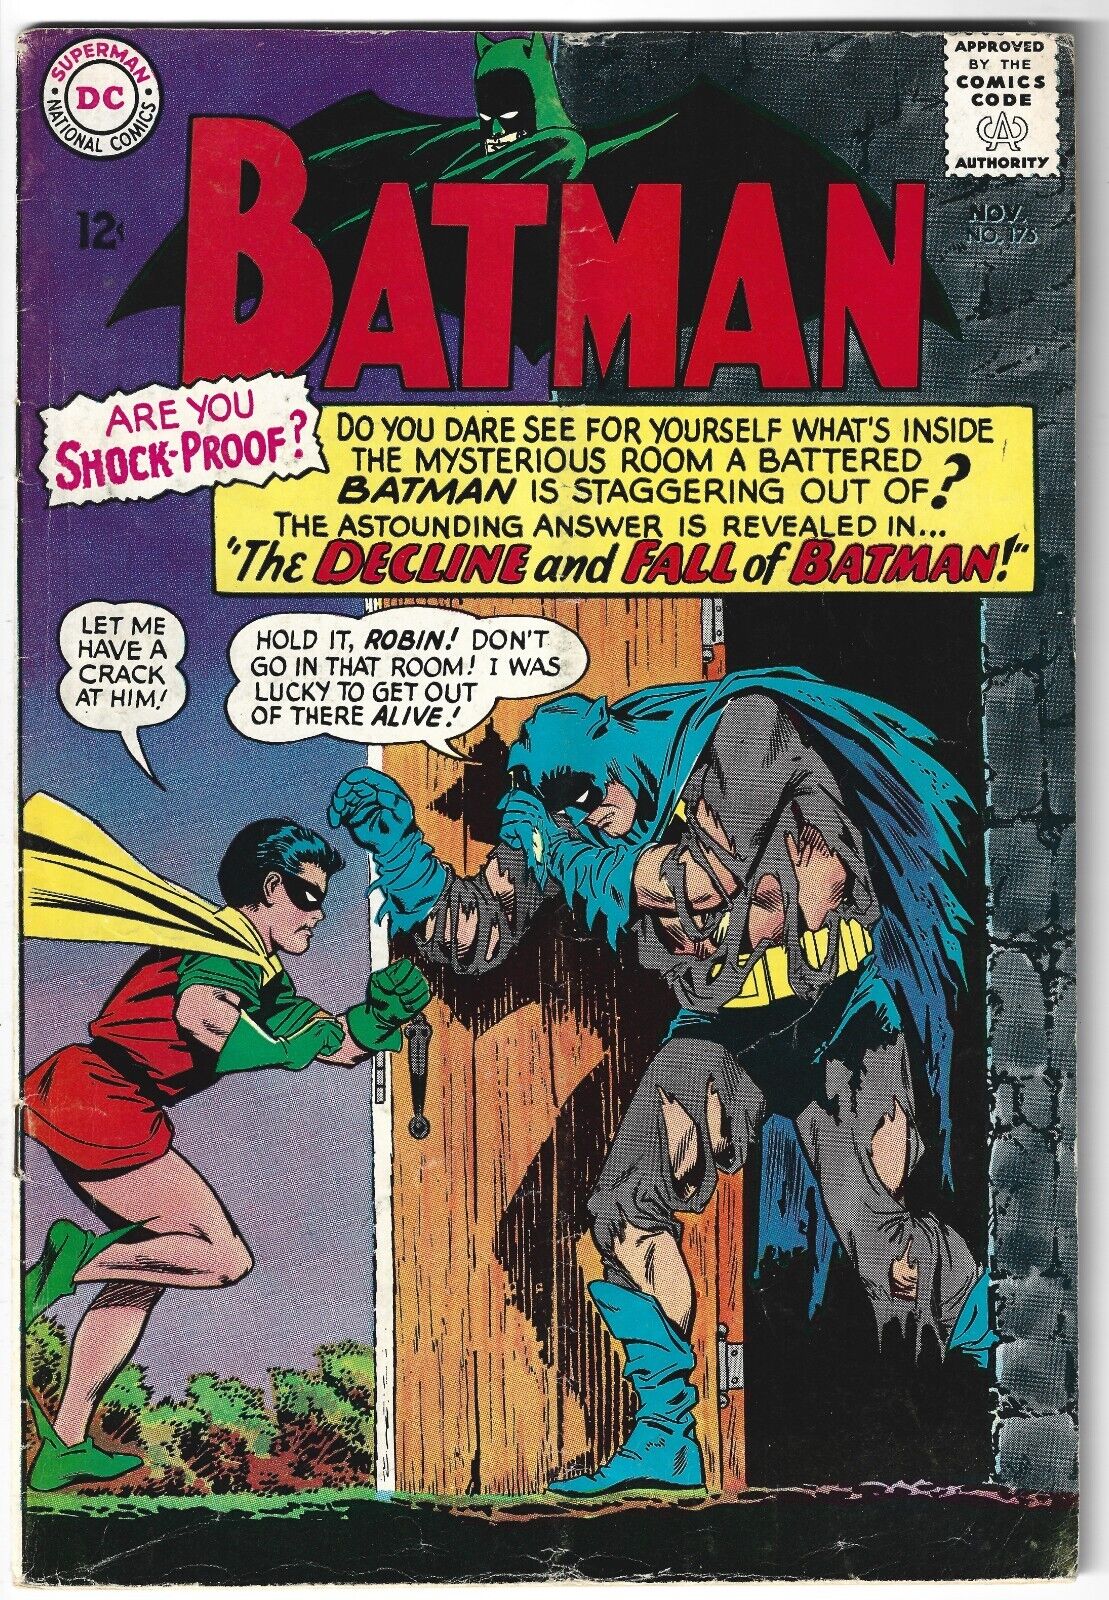 Batman #175 DC Comics Silver Age Nov 1965 4.5 VG+